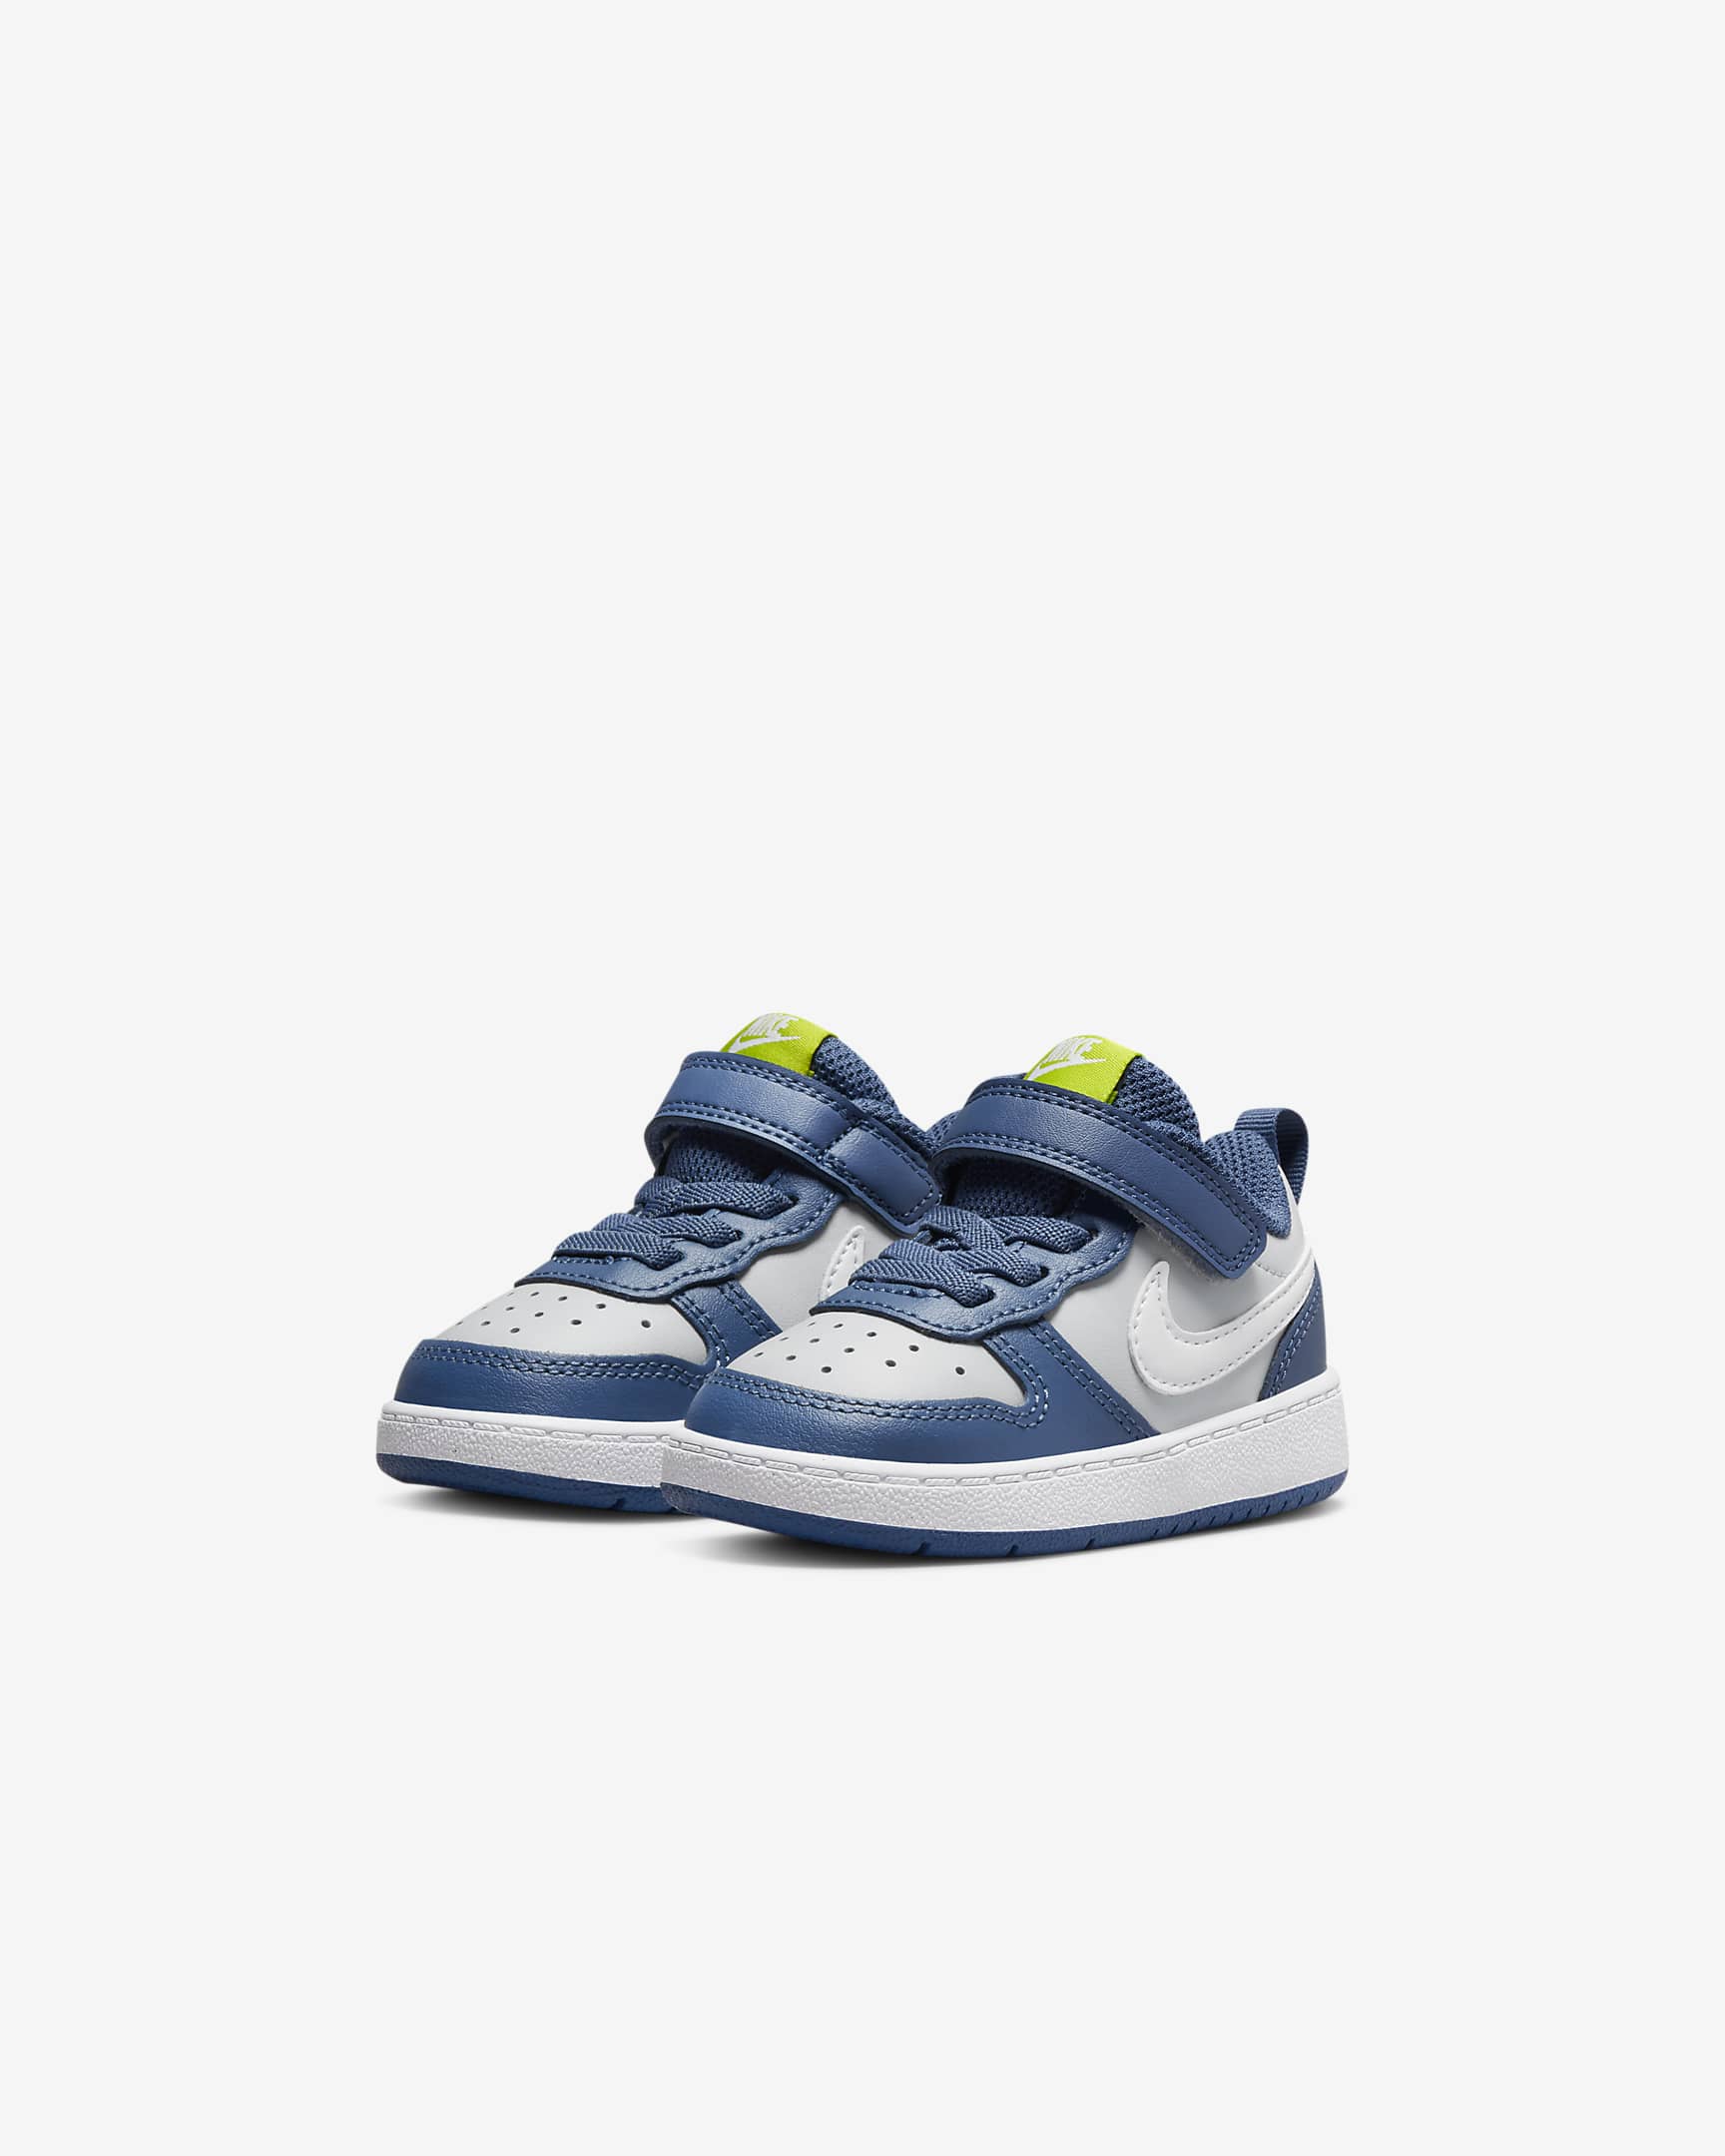 Nike Court Borough Low 2 Baby/Toddler Shoes - Grey Fog/Mystic Navy/Atomic Green/White